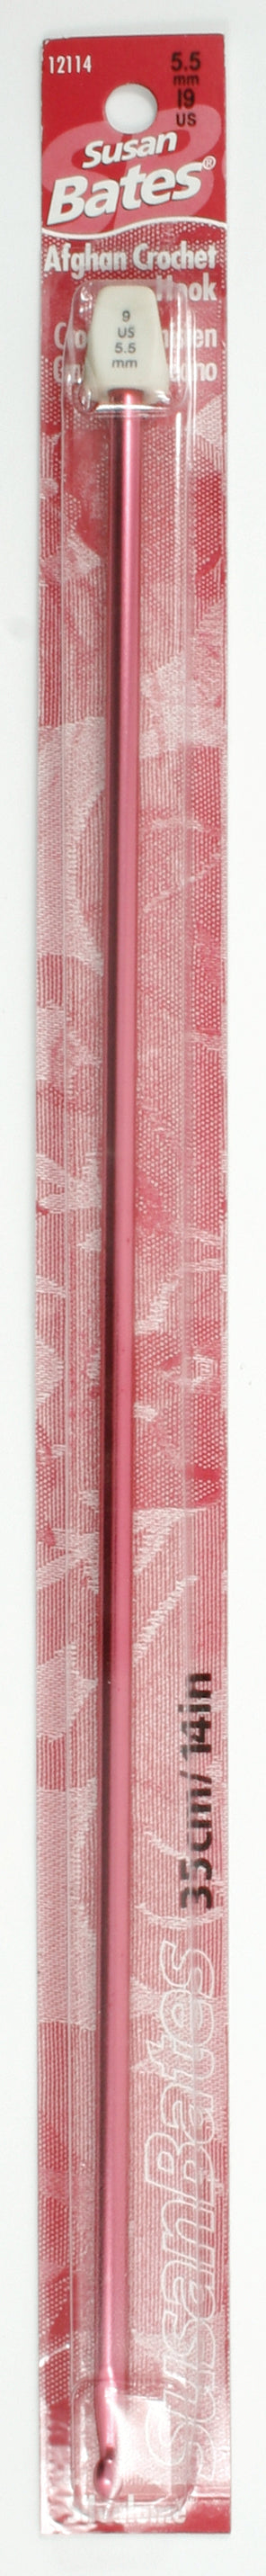 14" SB Silvalume Afghan Crochet Hook, 5.5mm,I-9